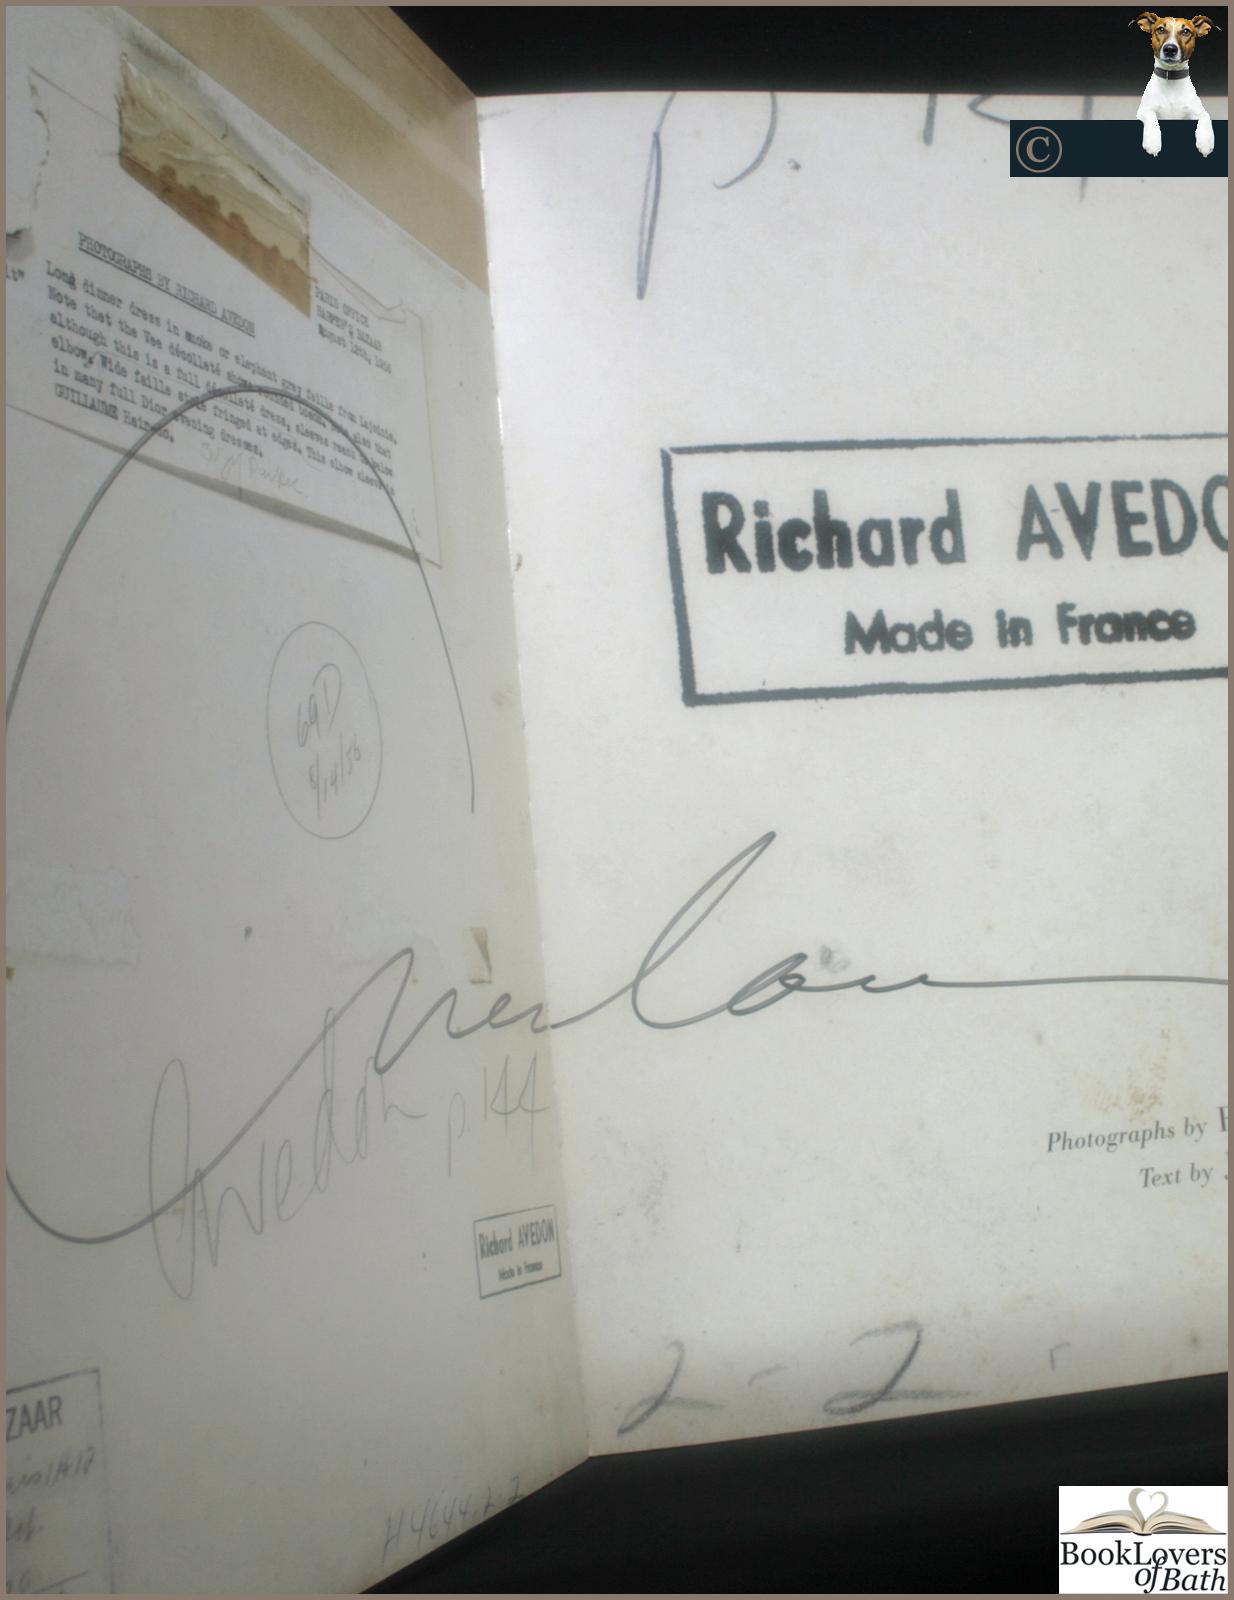 Richard Avedon: Made in France